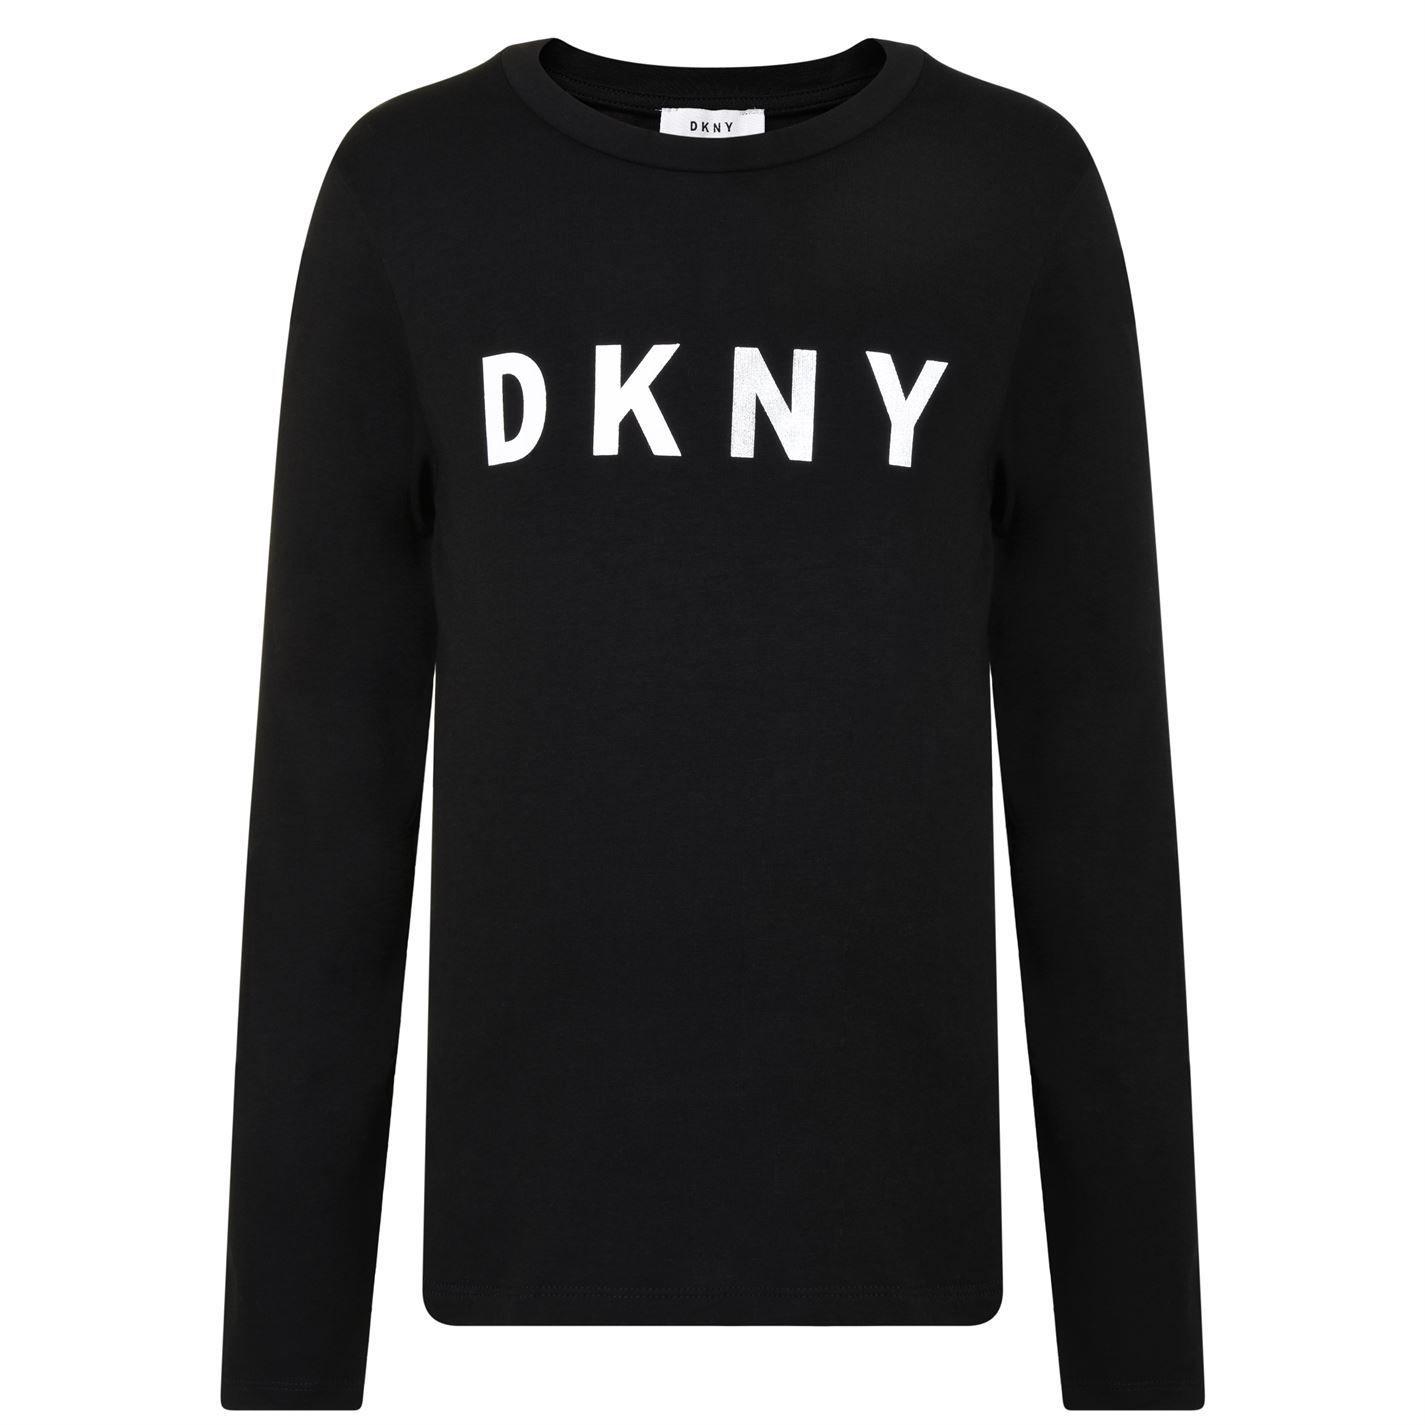 DKNY Logo - Kids Girls DKNY Logo T Shirt Crew Neck Long Sleeve New | eBay